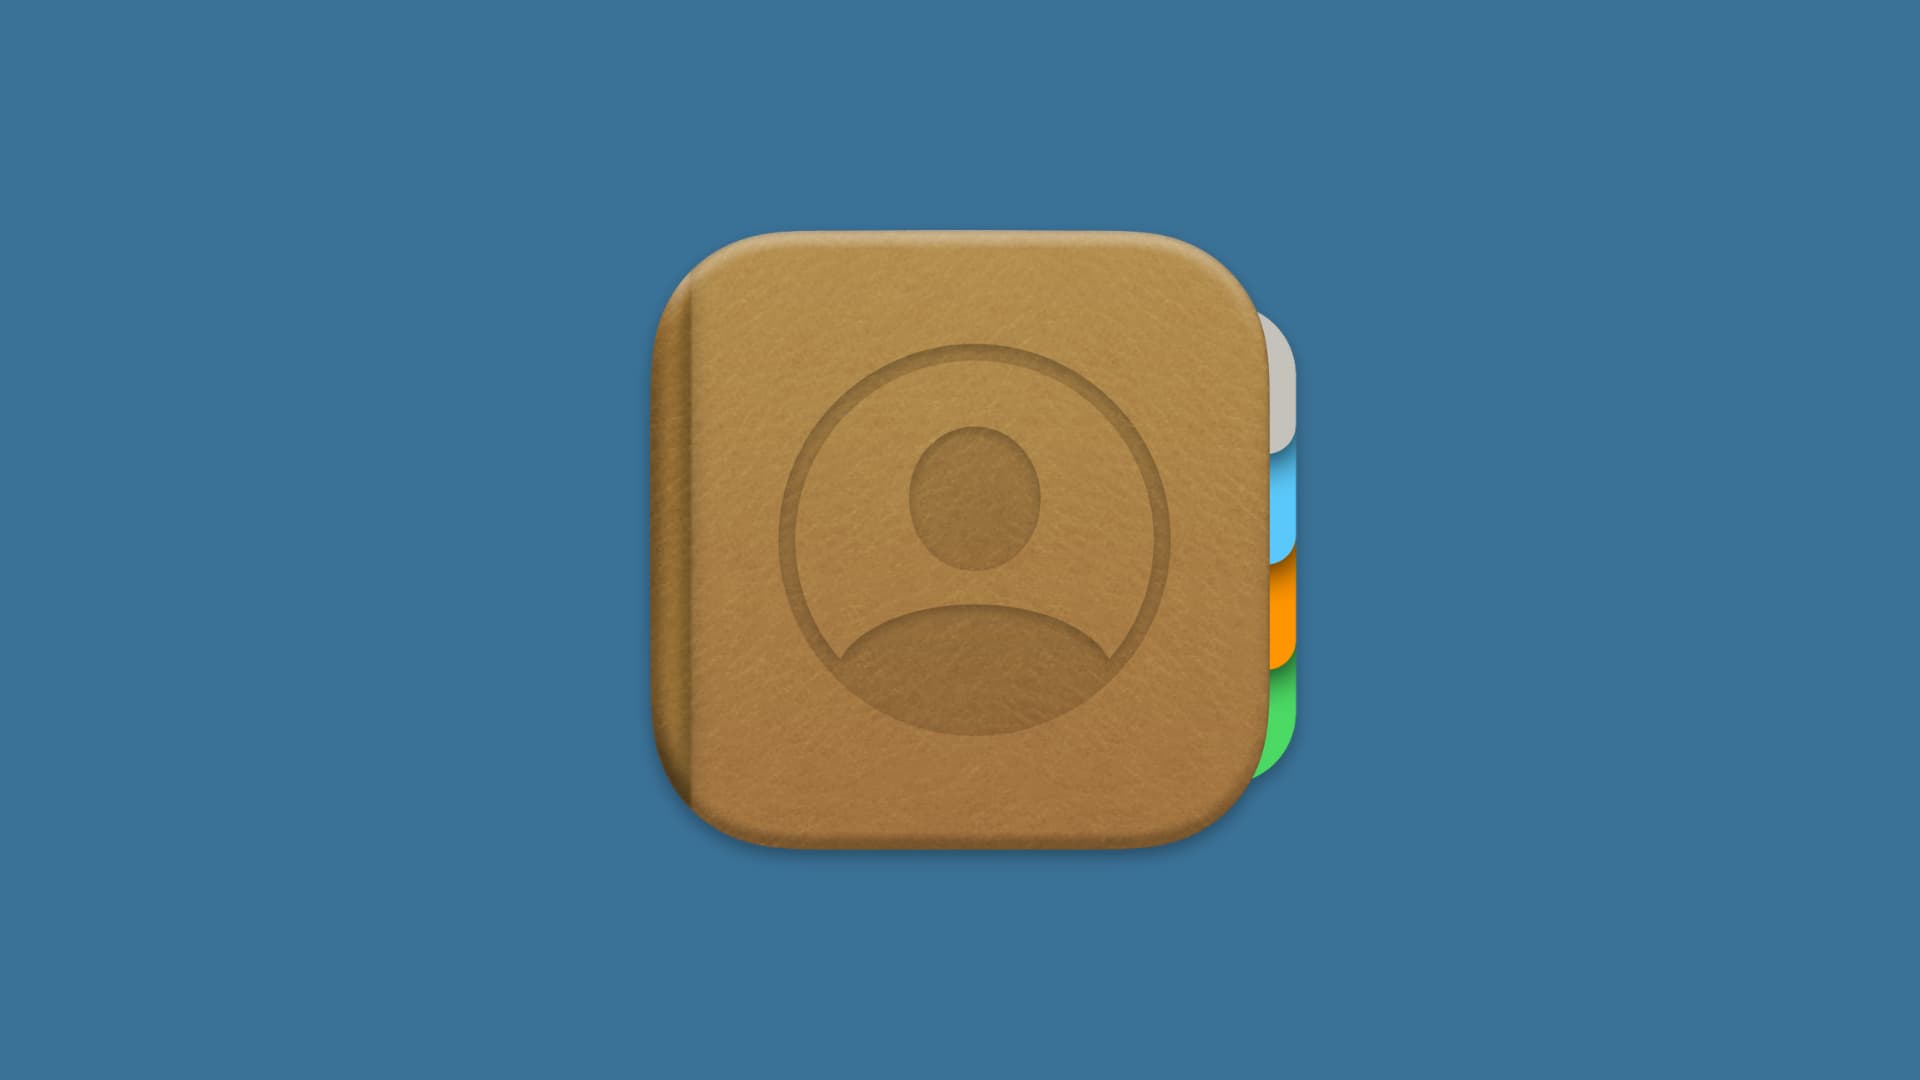 Mac Contacts app icon